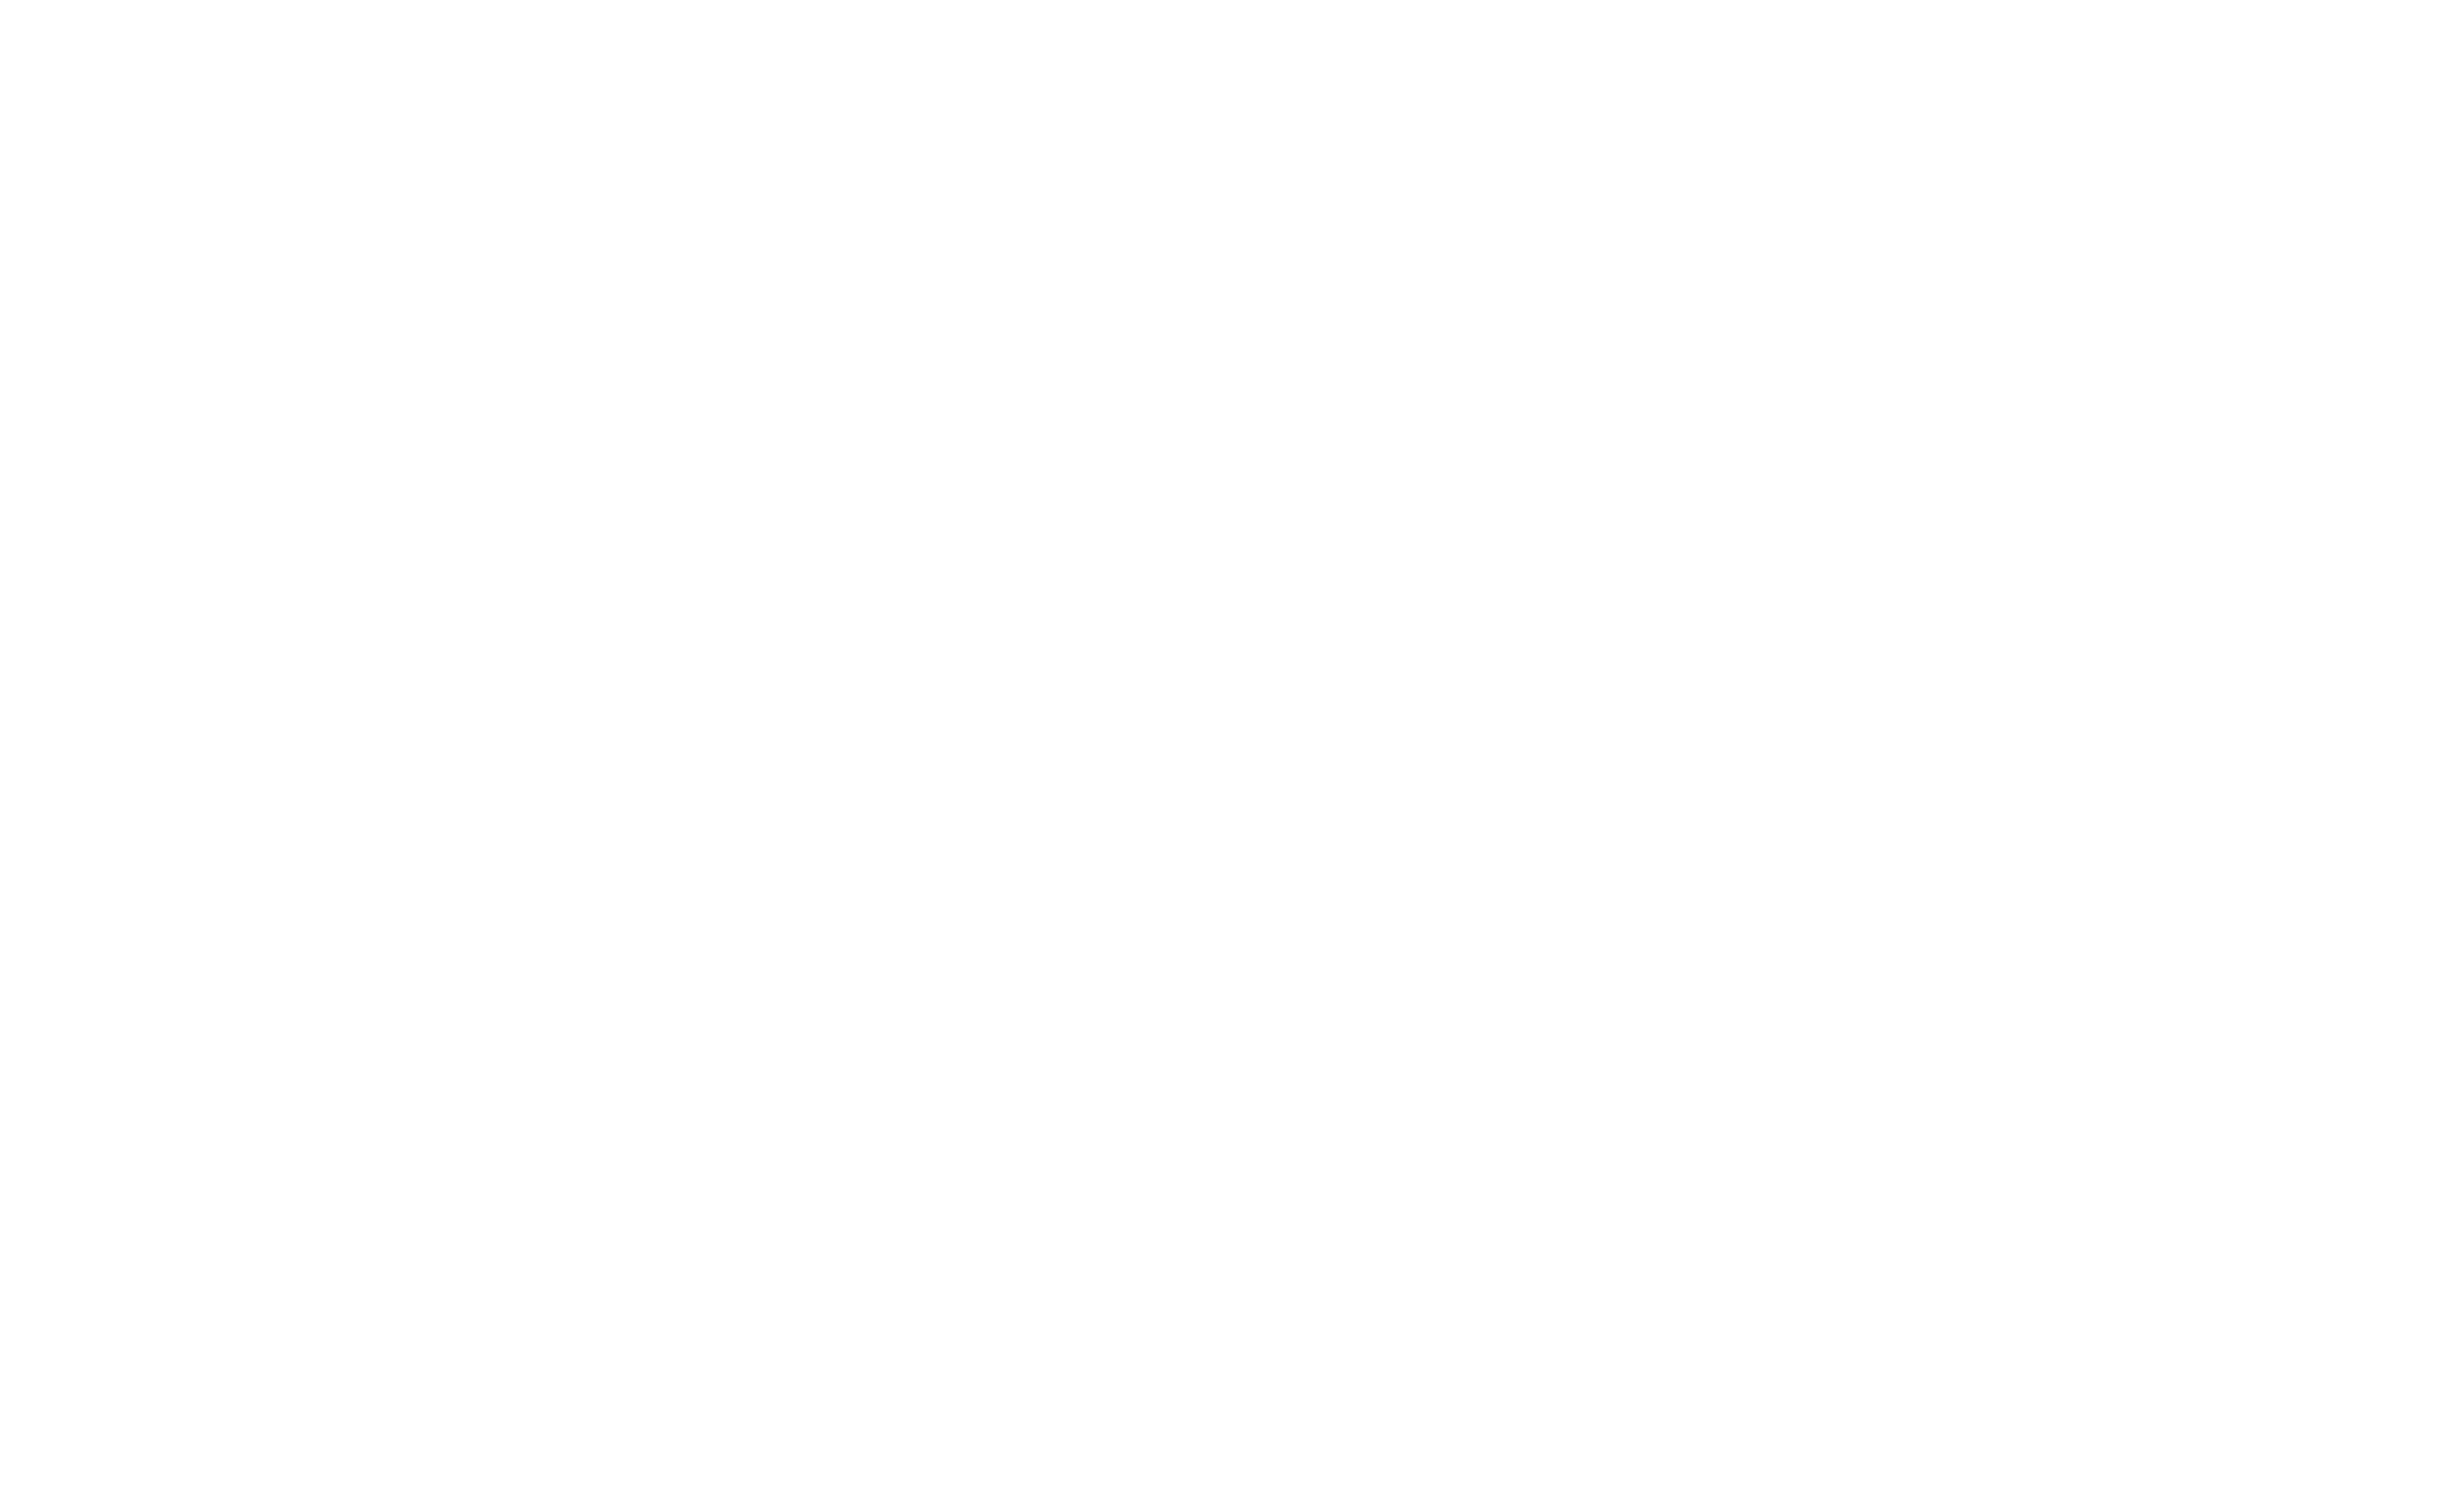 Sentinel Soultions